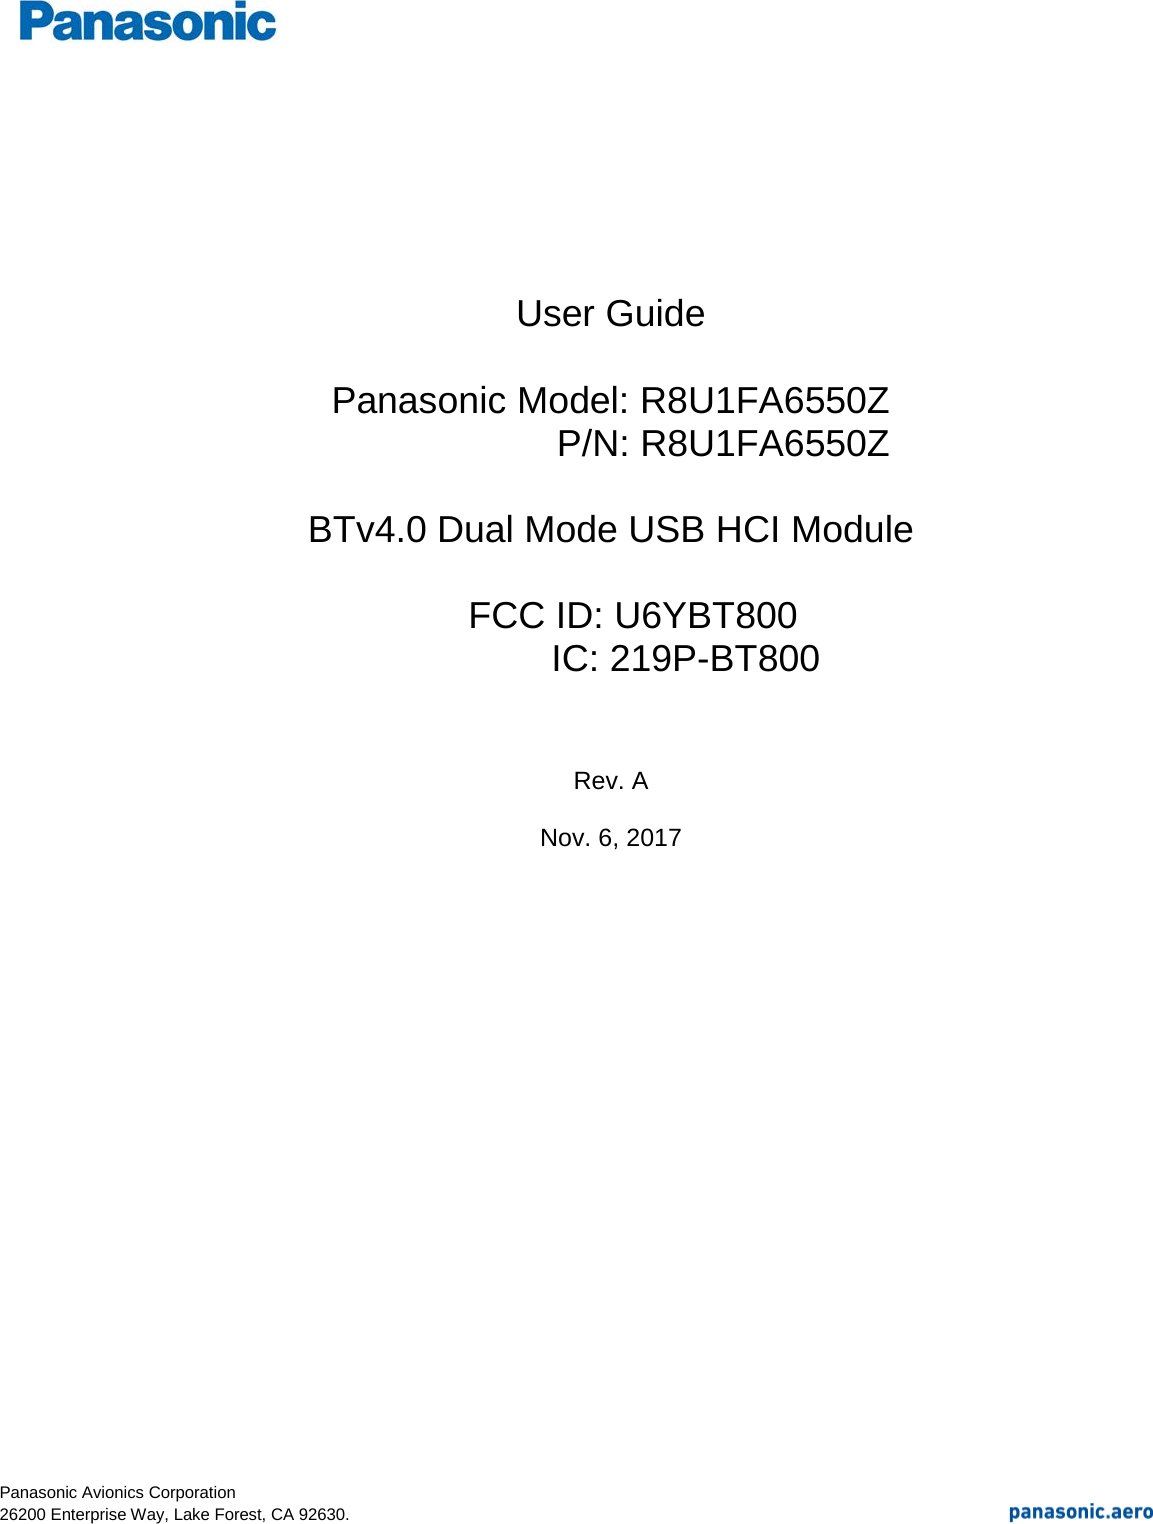  Panasonic Avionics Corporation                                                                                                                                                    26200 Enterprise Way, Lake Forest, CA 92630.        User Guide  Panasonic Model: R8U1FA6550Z P/N: R8U1FA6550Z  BTv4.0 Dual Mode USB HCI Module  FCC ID: U6YBT800 IC: 219P-BT800   Rev. A  Nov. 6, 2017    